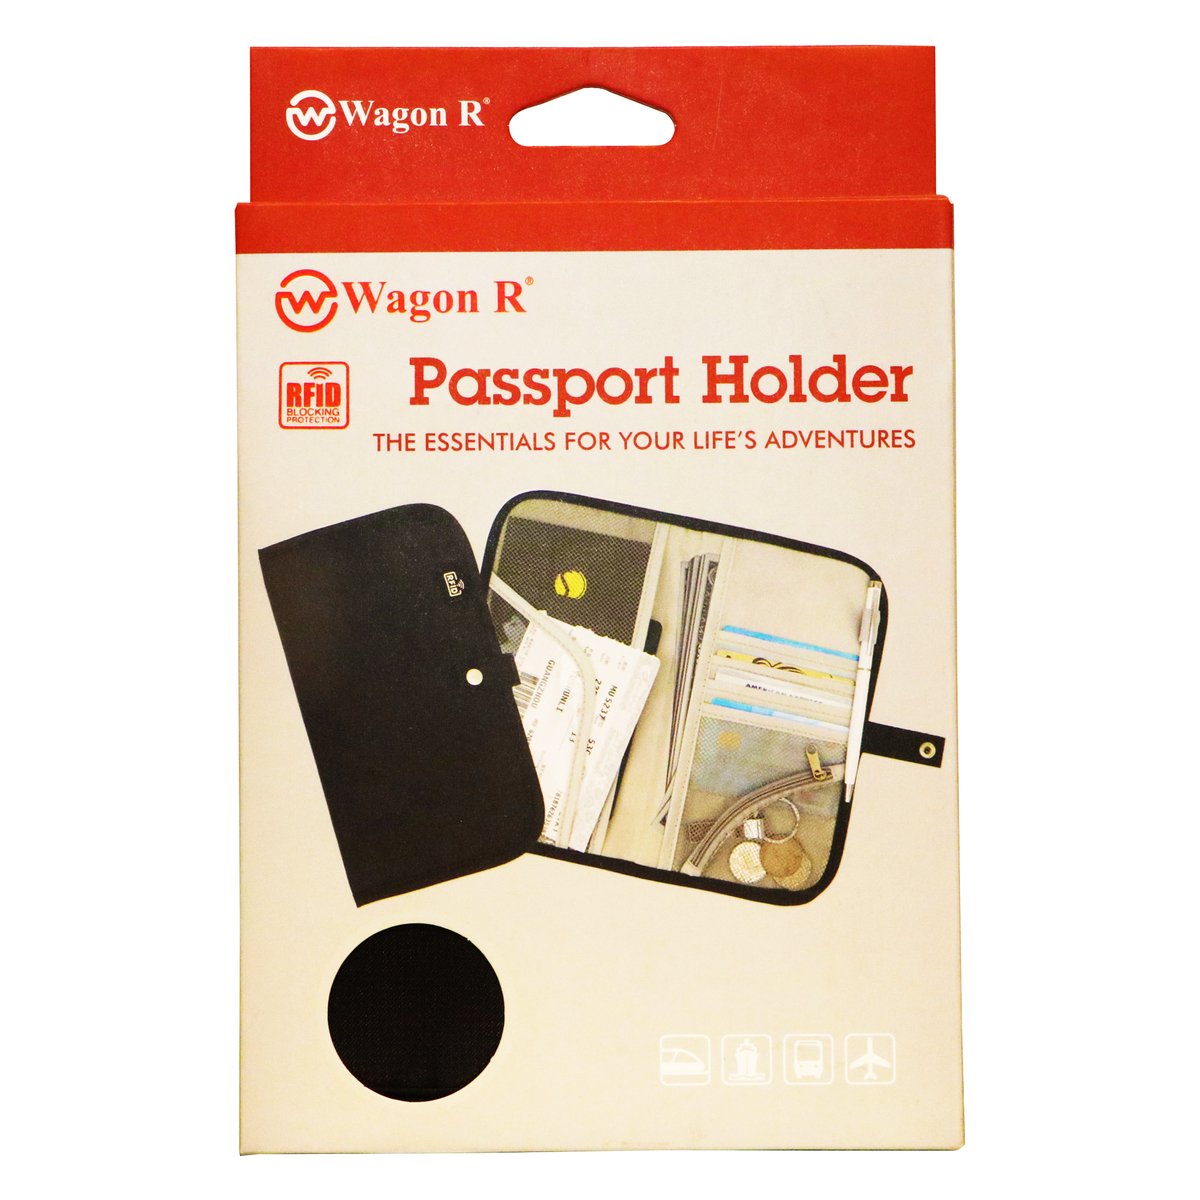 Wagon-R RF-ID Passport Holder SE-125